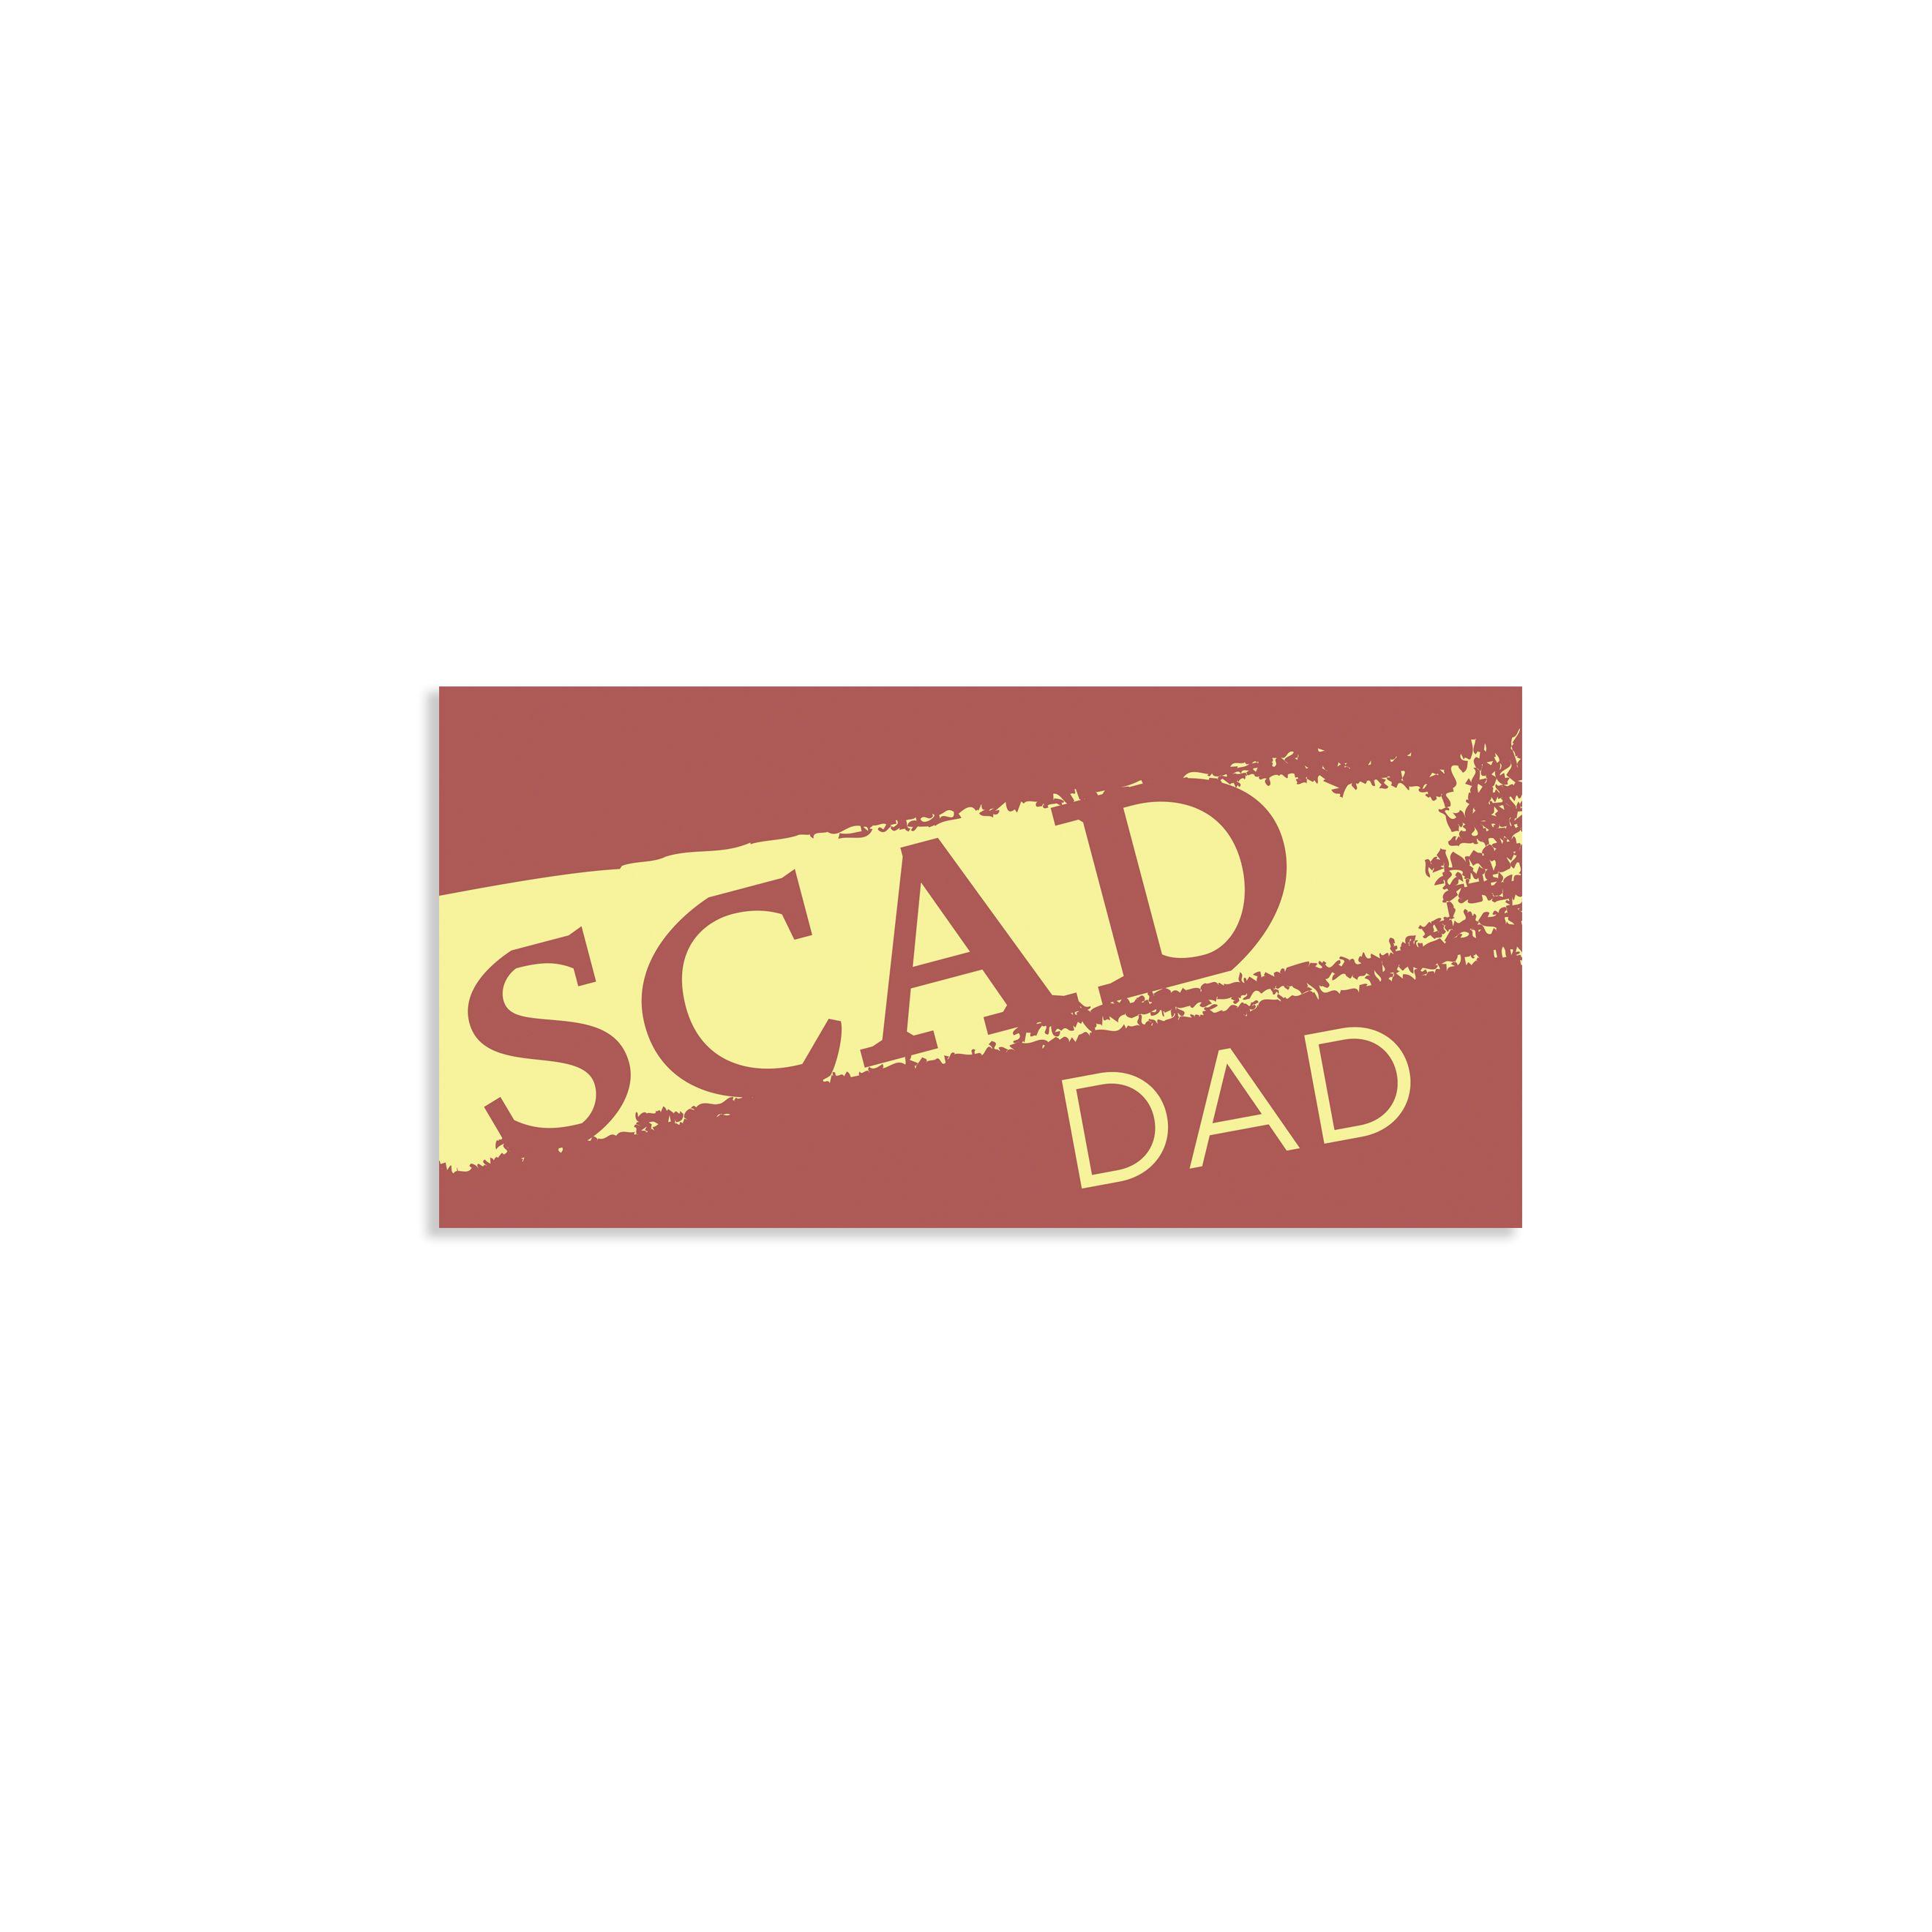 Maroon Rectangular Logo - SCAD Dad Rectangular Maroon and Yellow Decal - shopSCAD